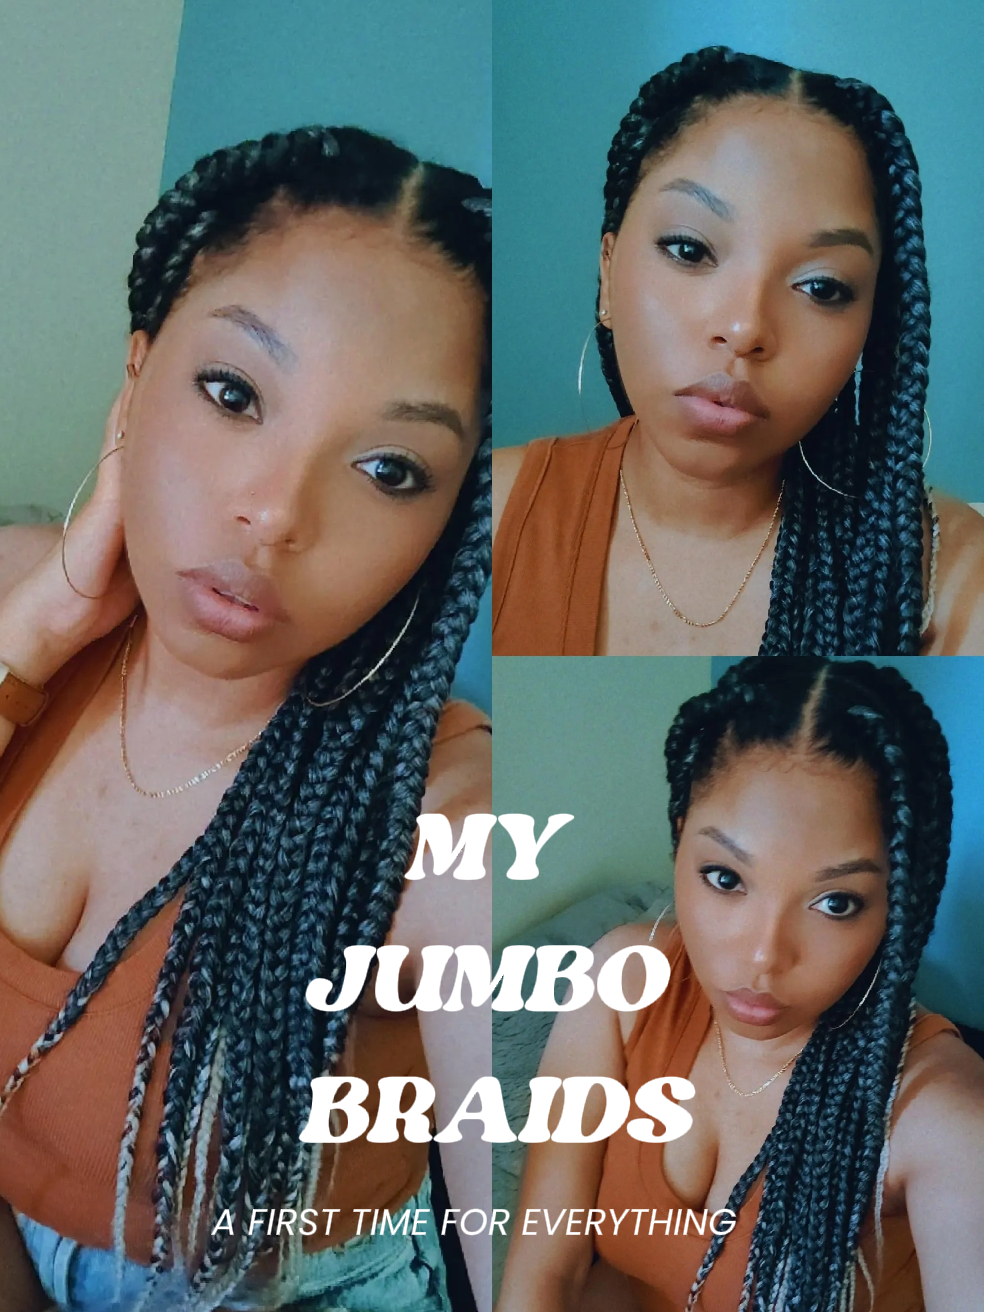 MY JUMBO BRAIDS 🍋, Gallery posted by Julez